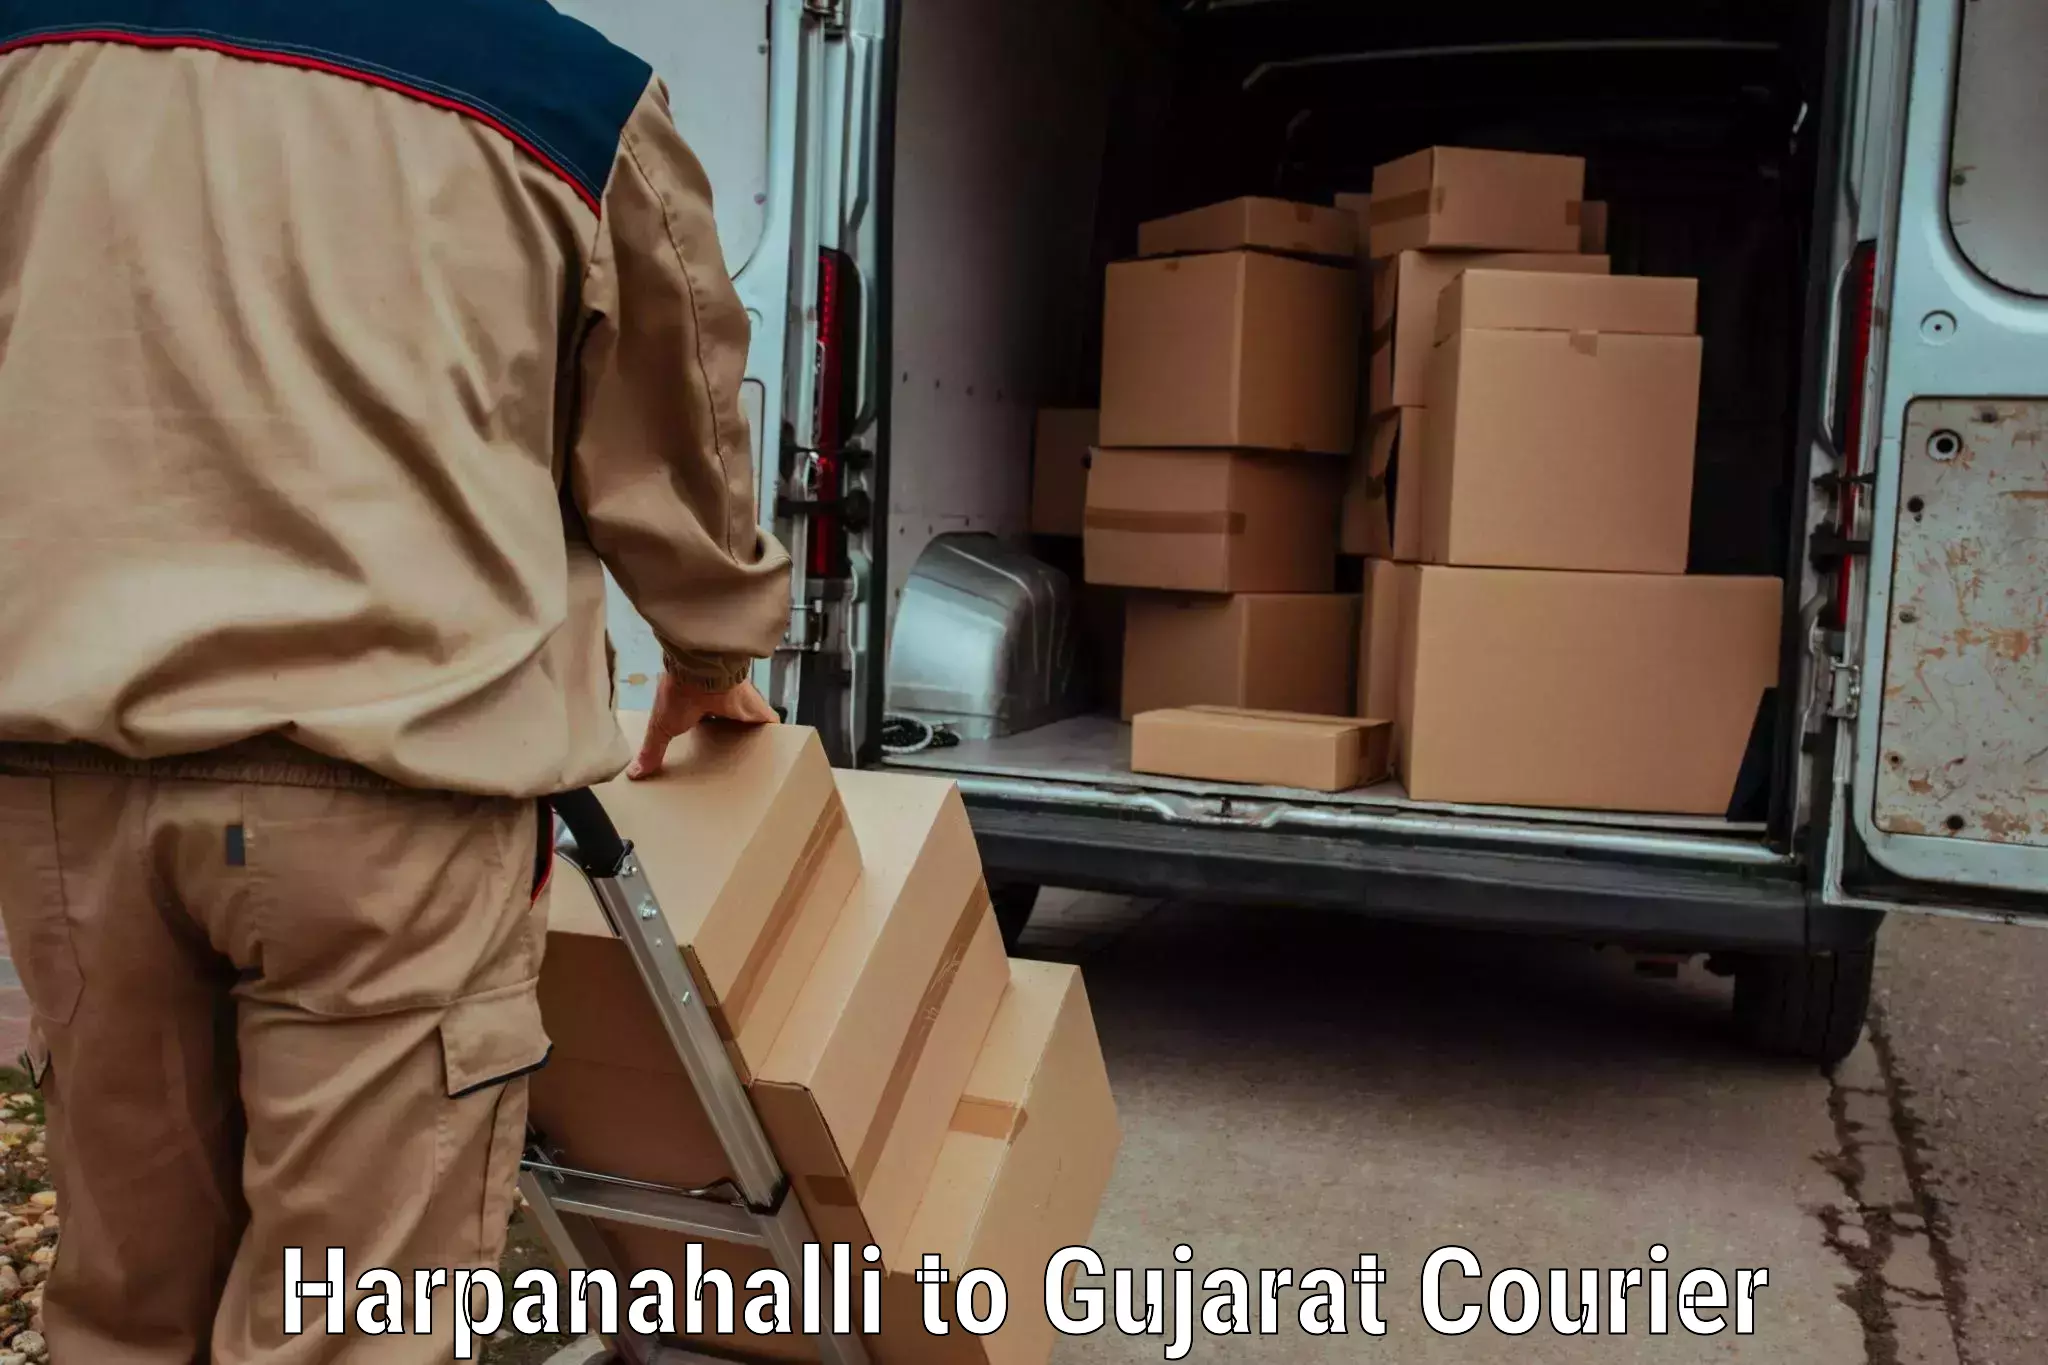 Next day courier Harpanahalli to GIDC